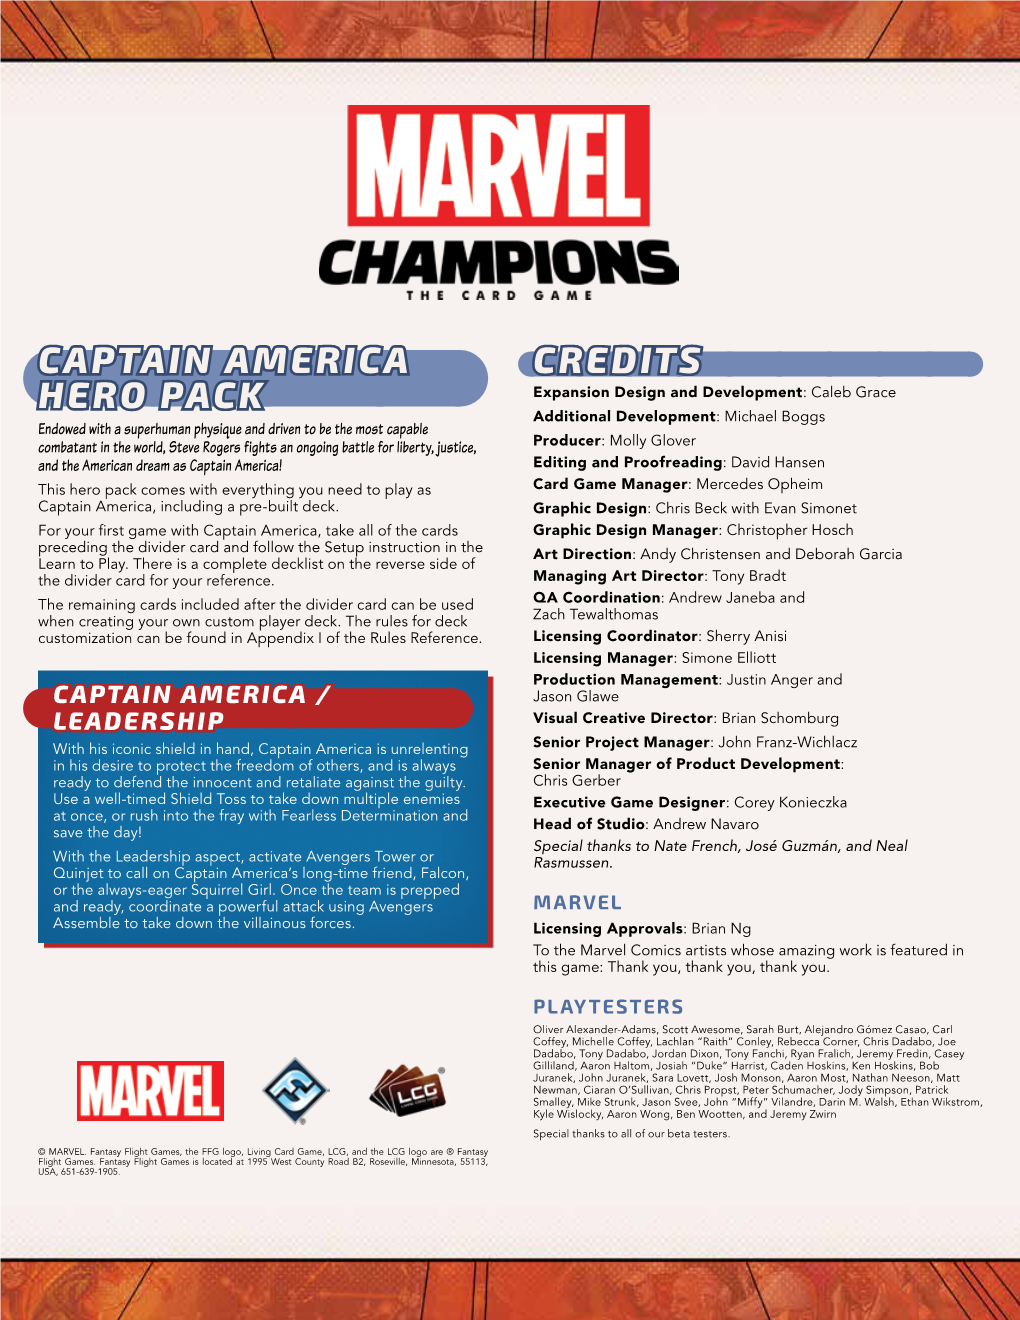 Captain America Hero Pack Credits